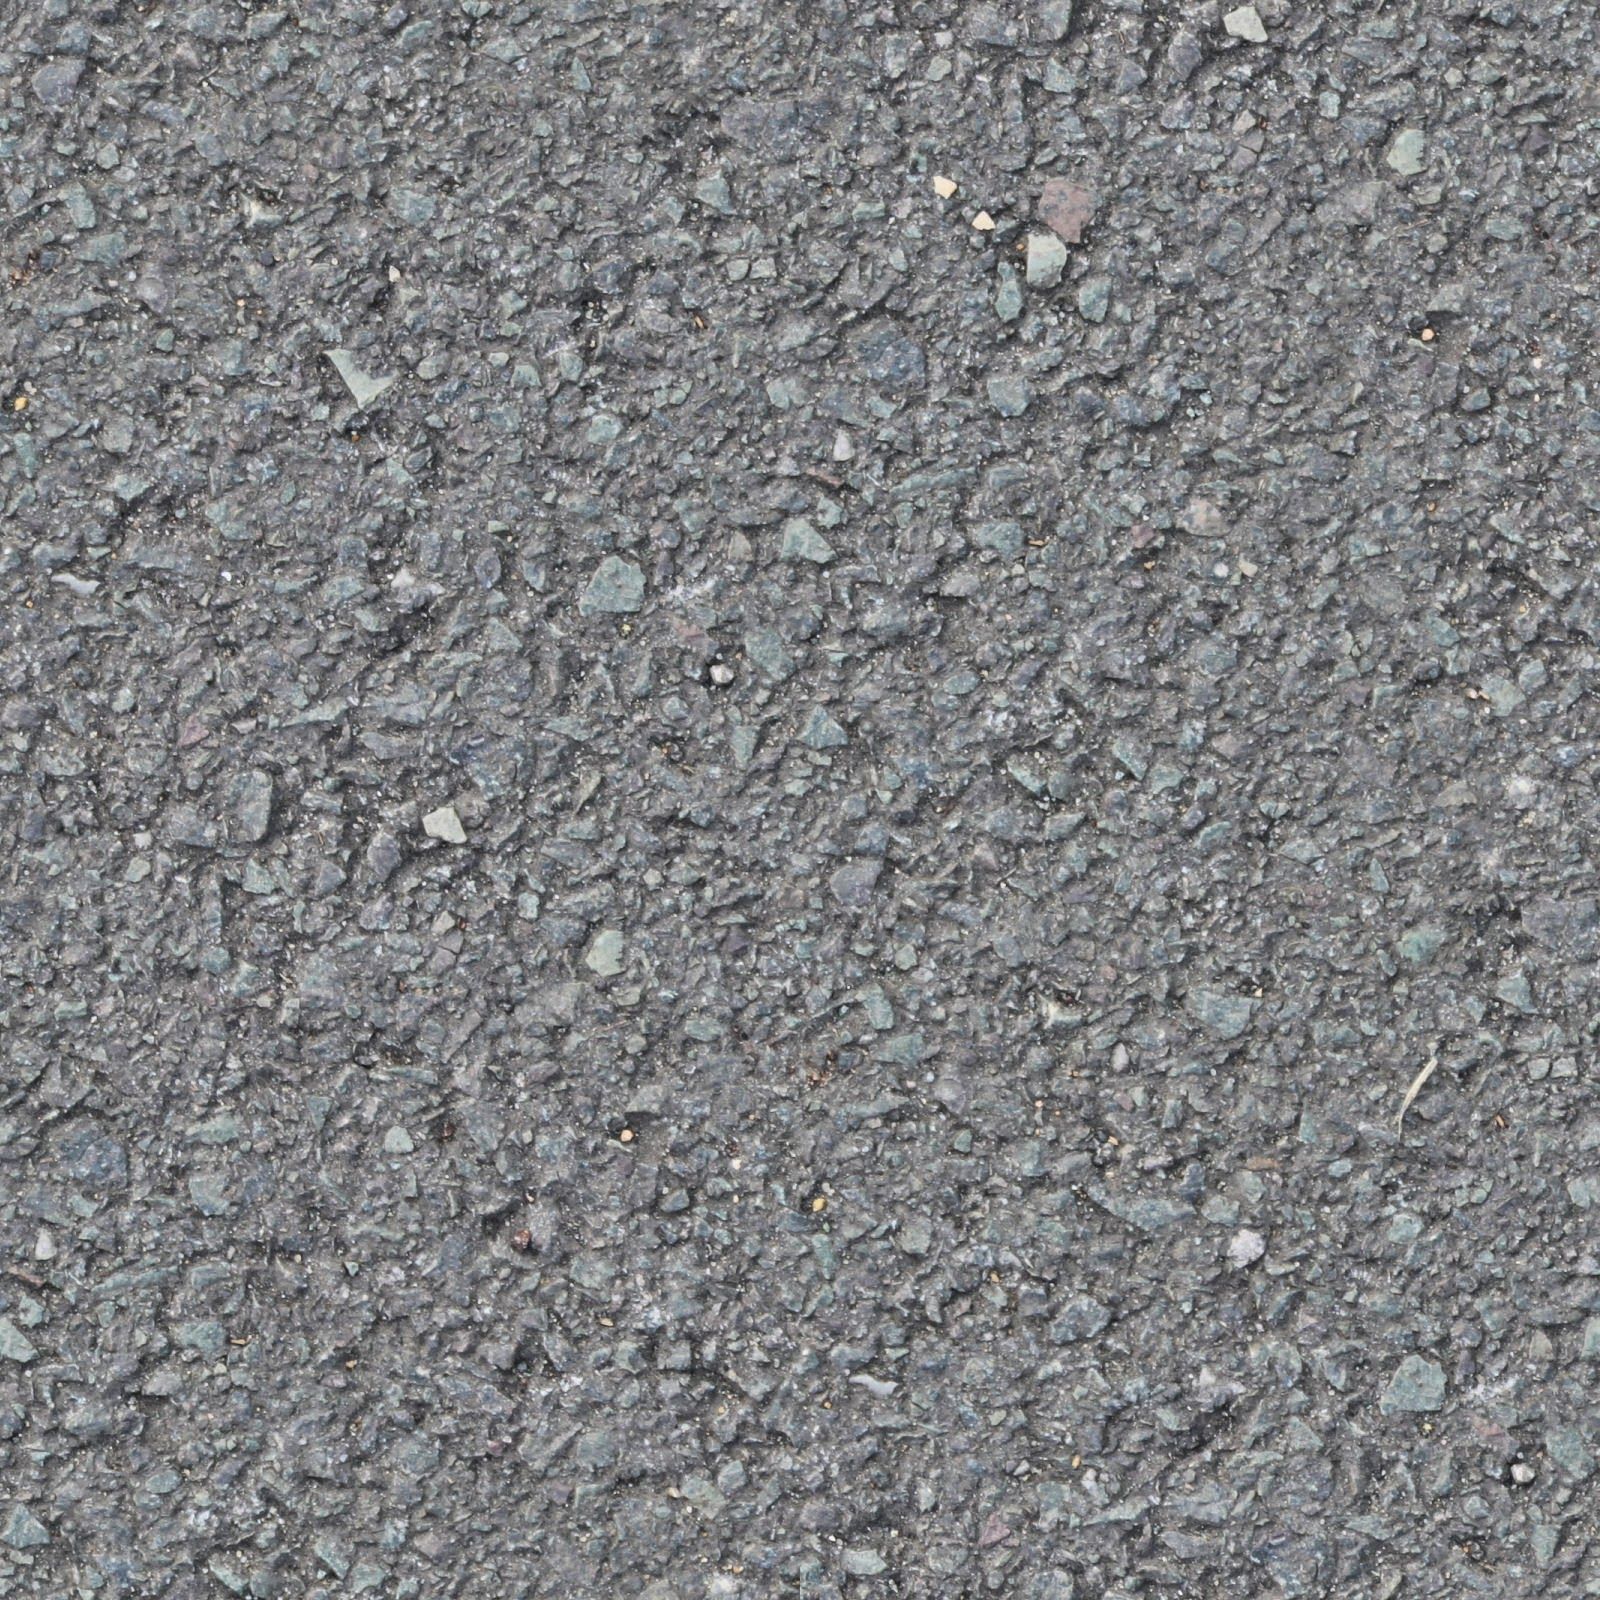 Gray concrete road photo